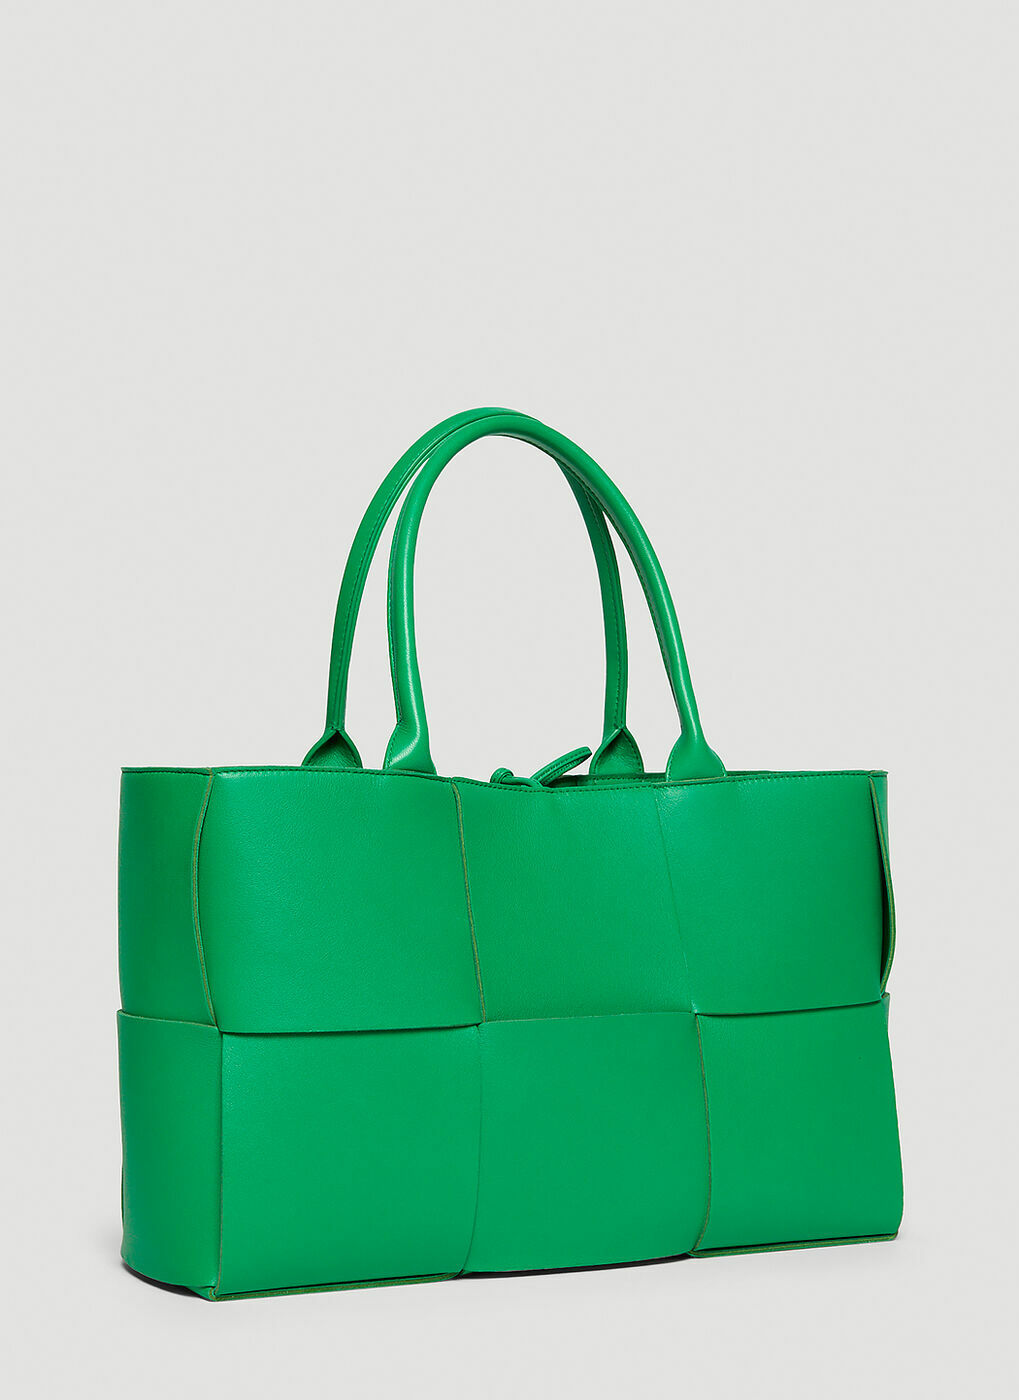 Intreccio Nappa Tote Bag in Green Bottega Veneta